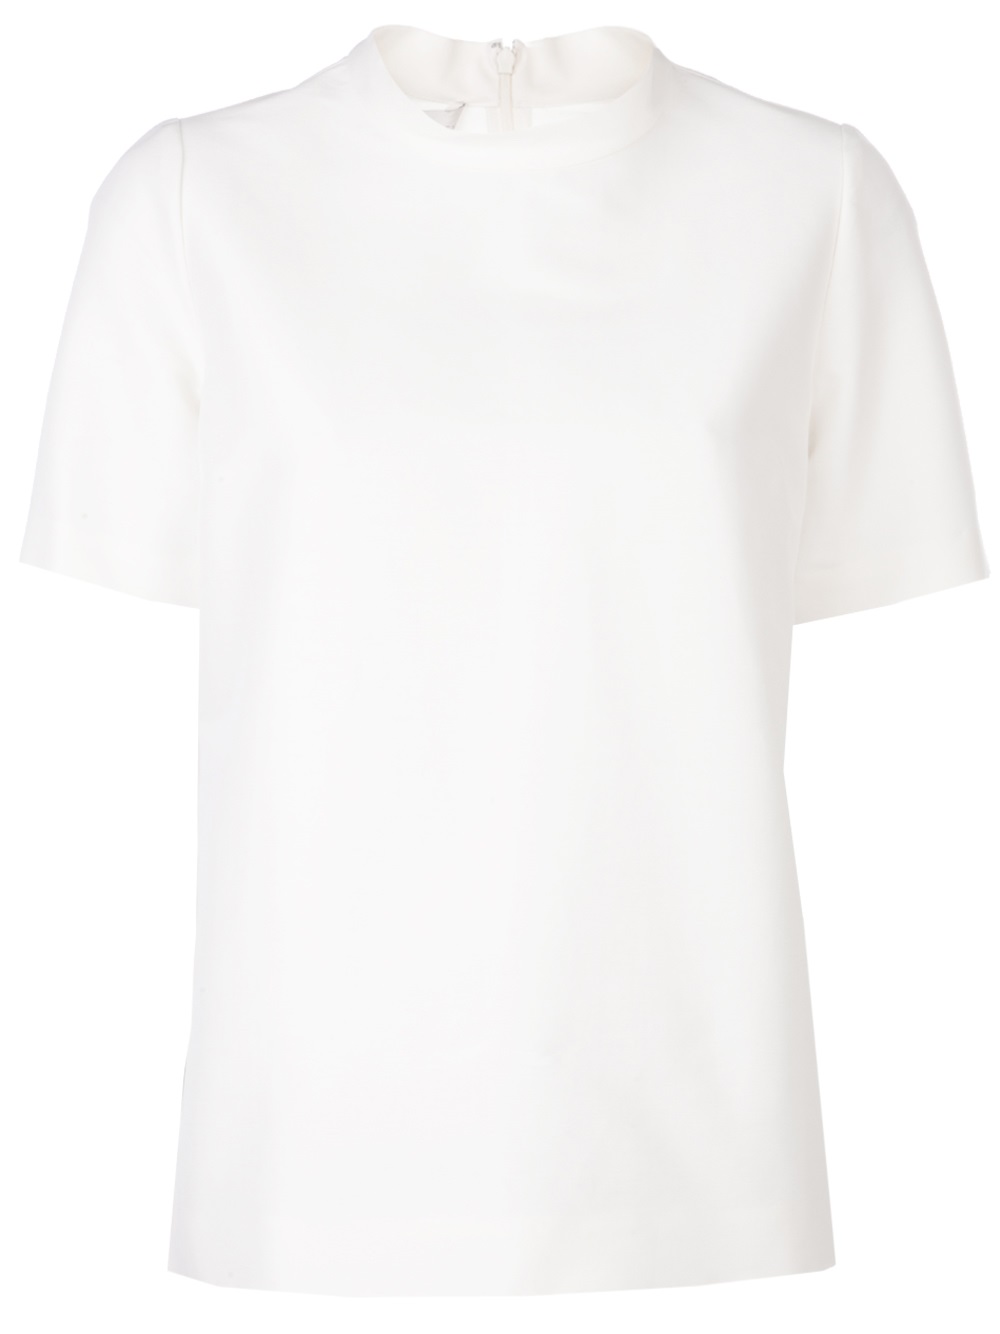 Lyst - Stella mccartney Bow Detail Shirt in White